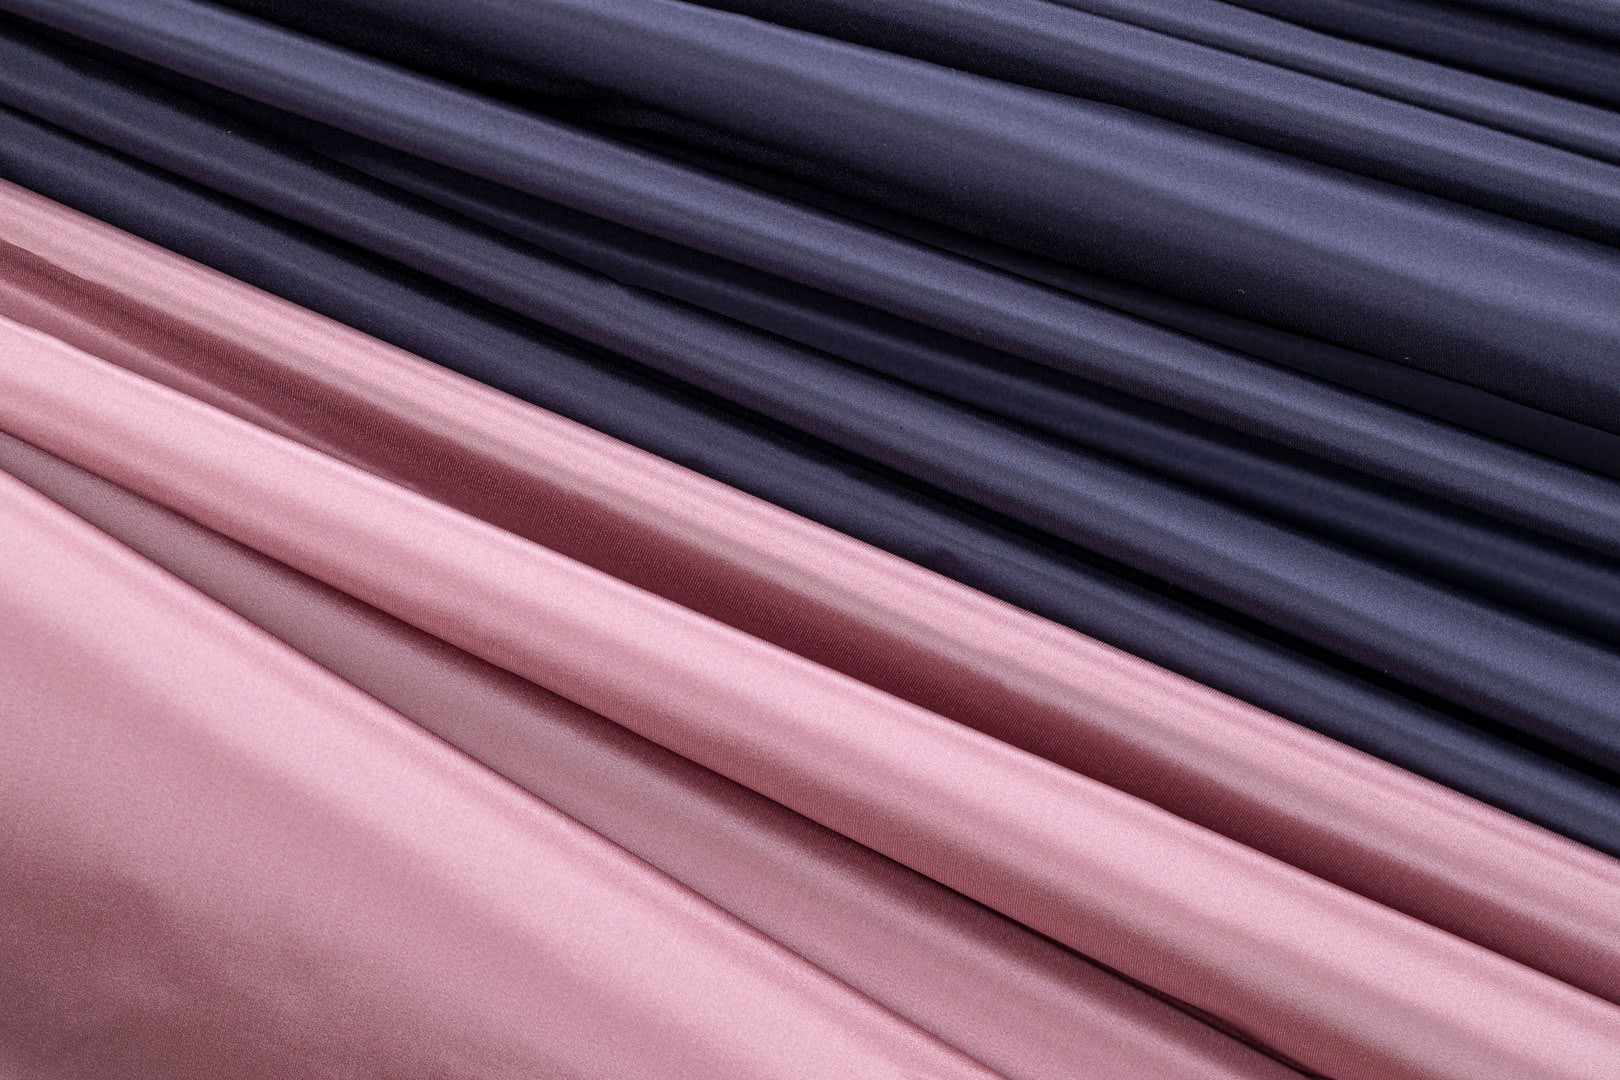 Premium quality Italian silk taffeta fabric for dressmaking